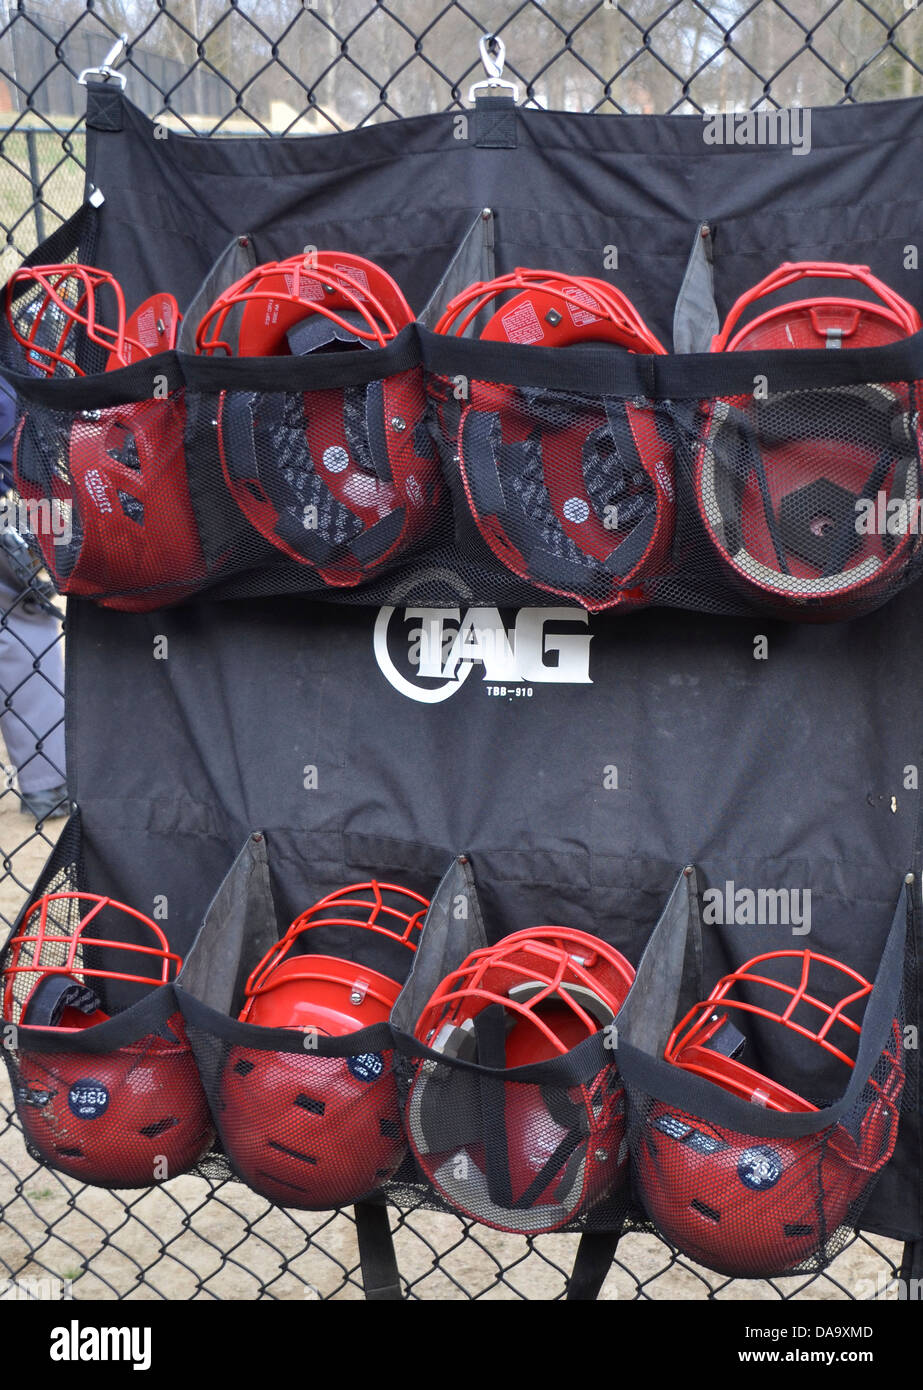 Batting helmets hanging on a backstop Stock Photo